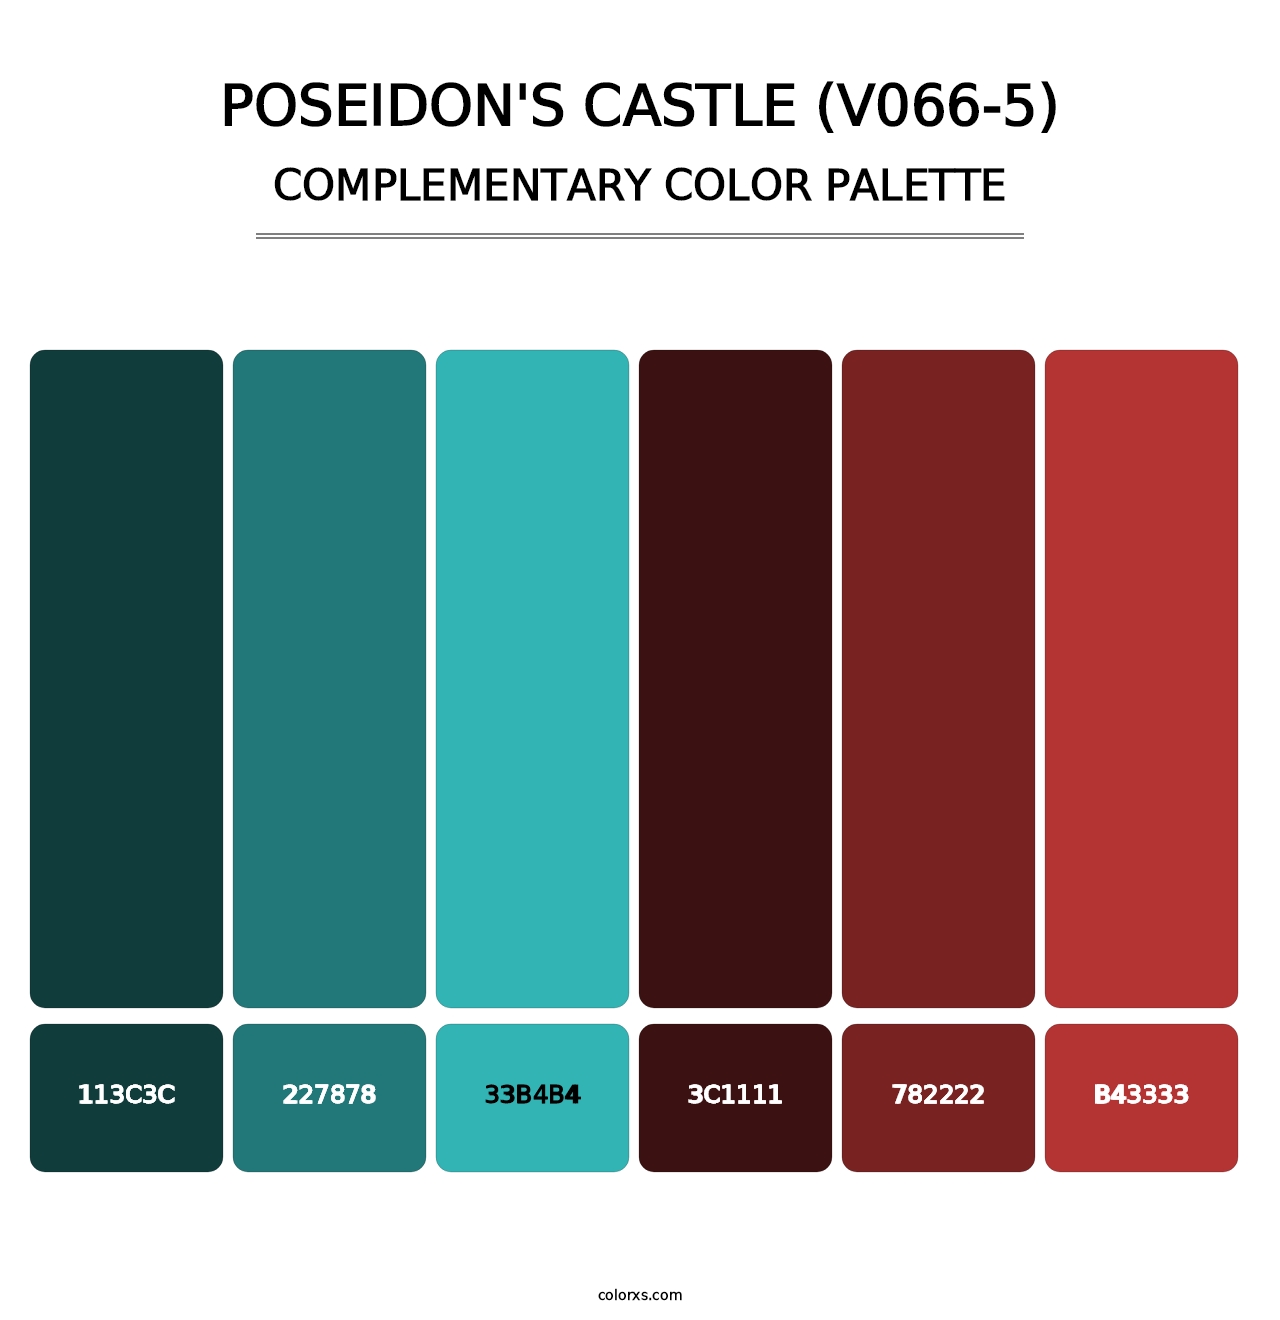 Poseidon's Castle (V066-5) - Complementary Color Palette